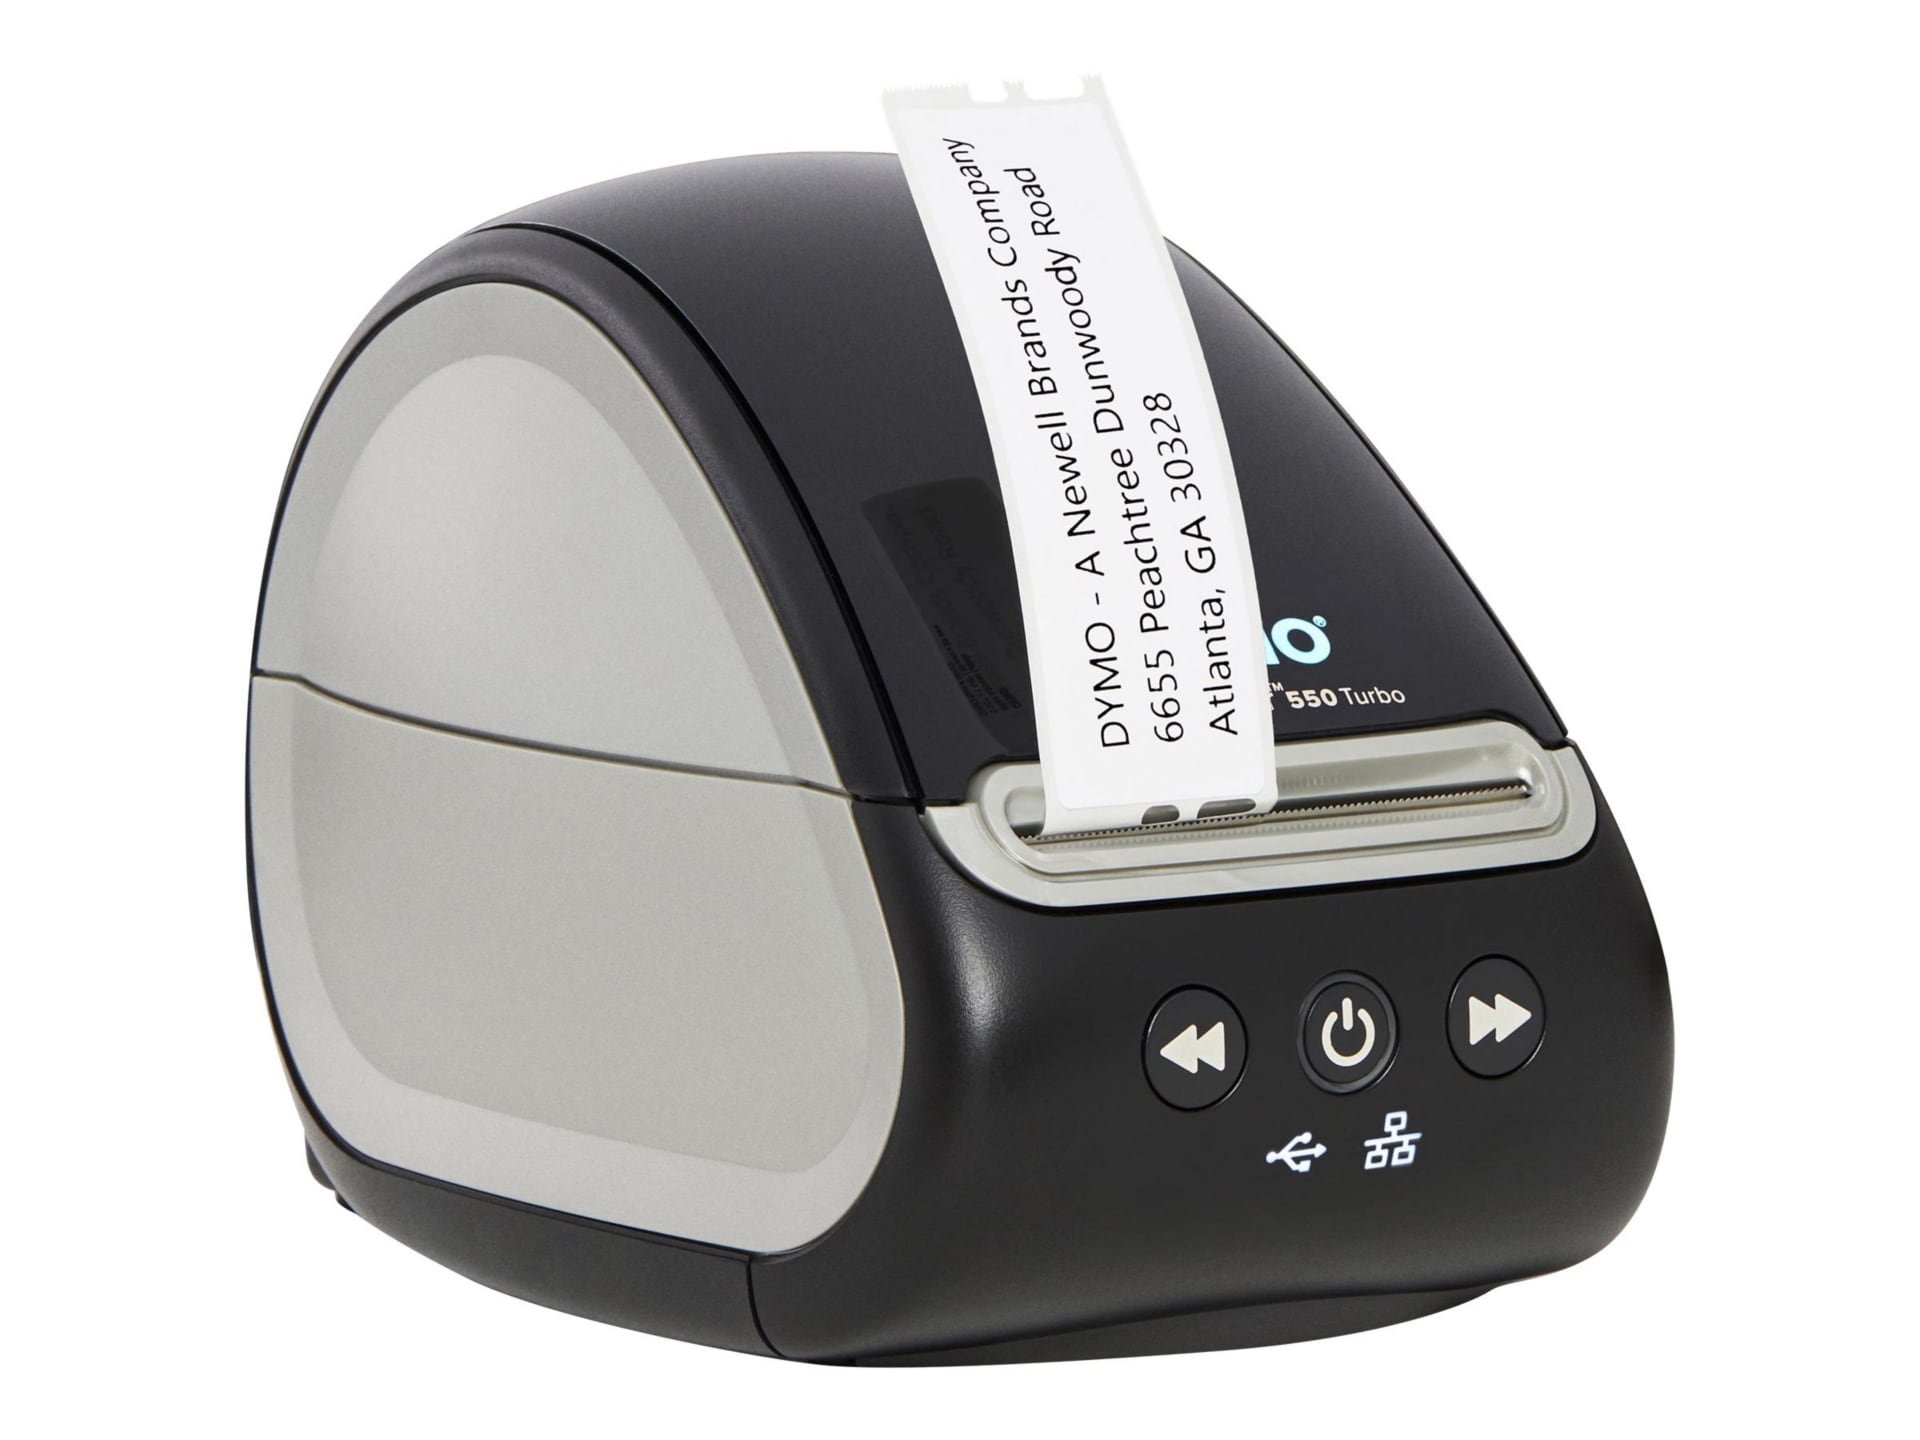 svindler perforere forslag Dymo LabelWriter 550 Turbo - label printer - B/W - direct thermal - 2112553  - -